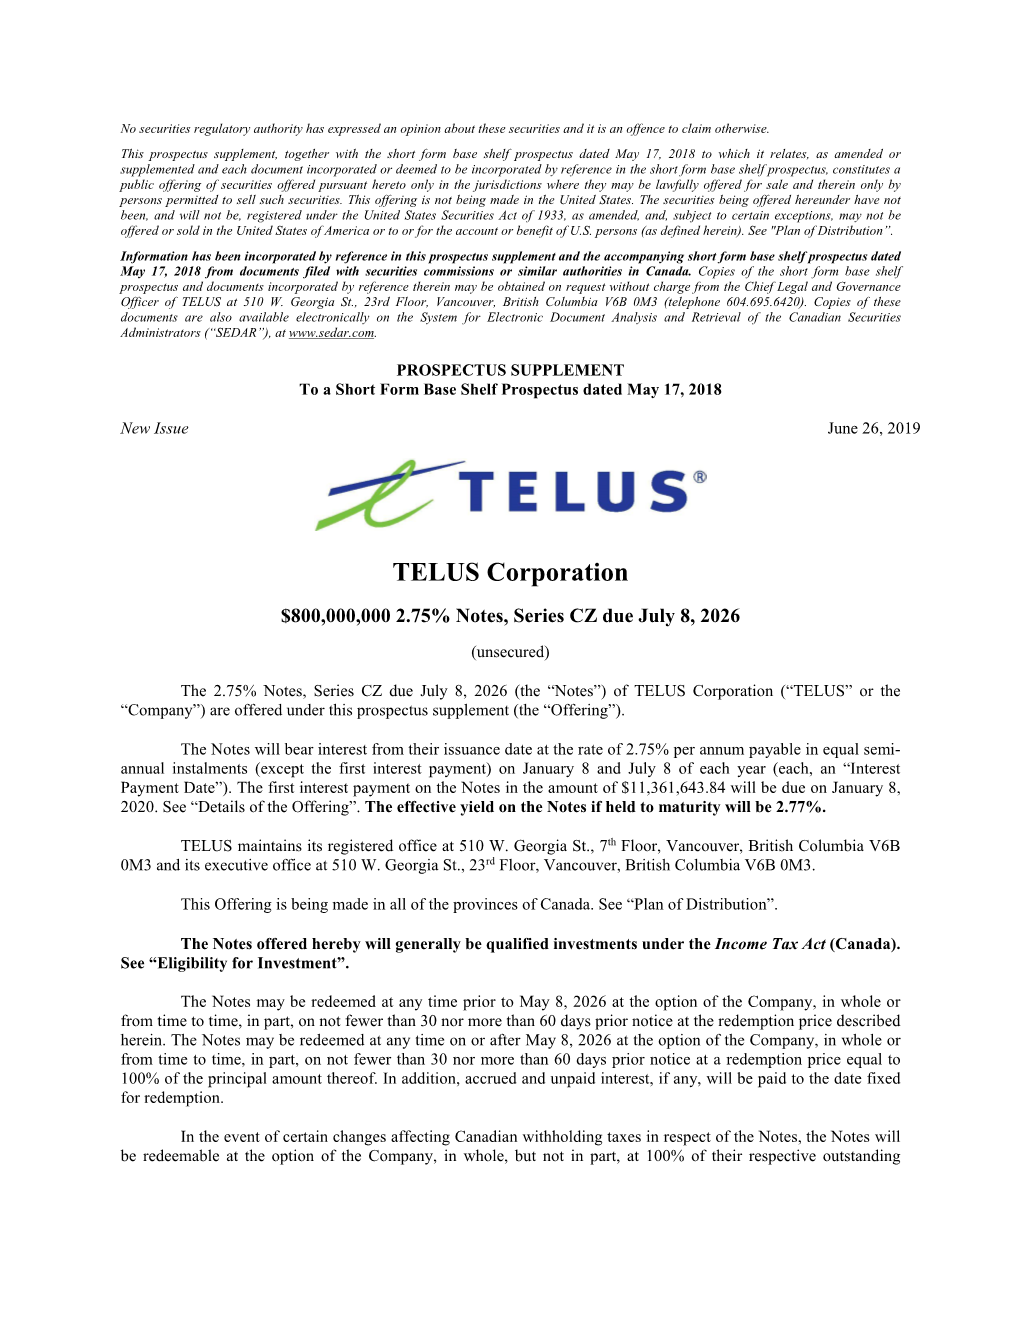 TELUS Corporation $800,000,000 2.75% Notes, Series CZ Due July 8, 2026